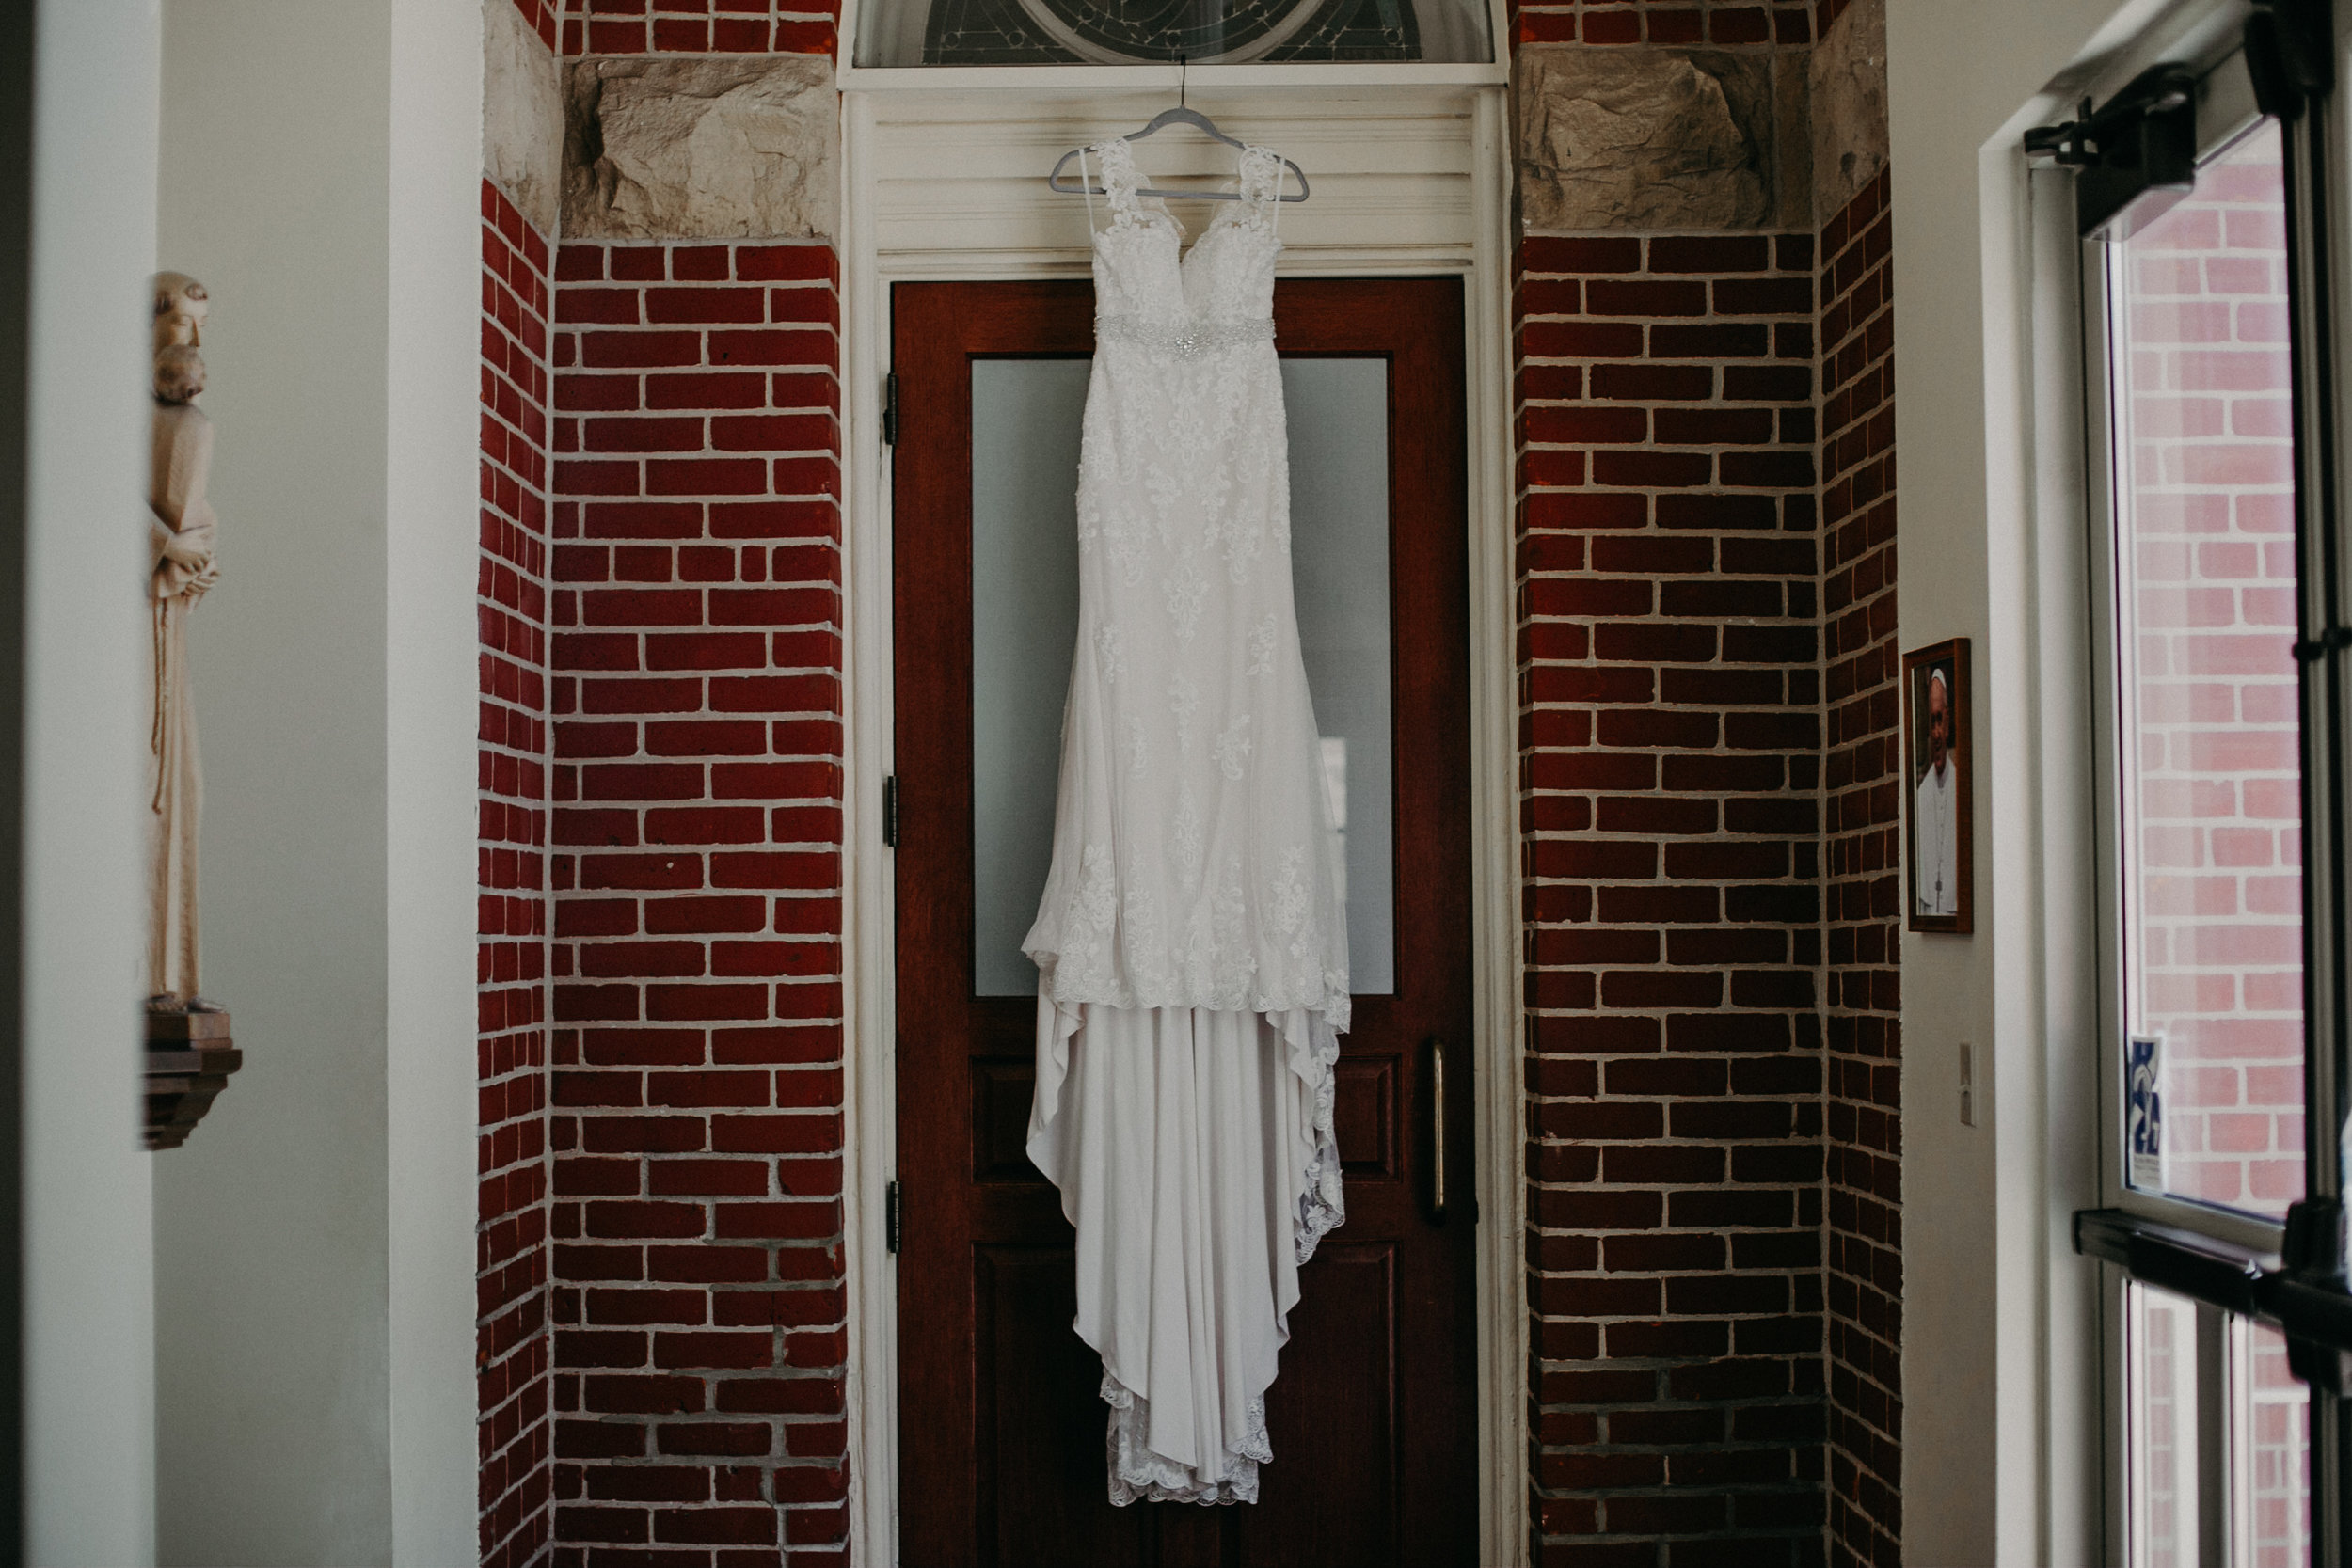  dress shots of Justin Alexander wedding dress in Marshfield WI 